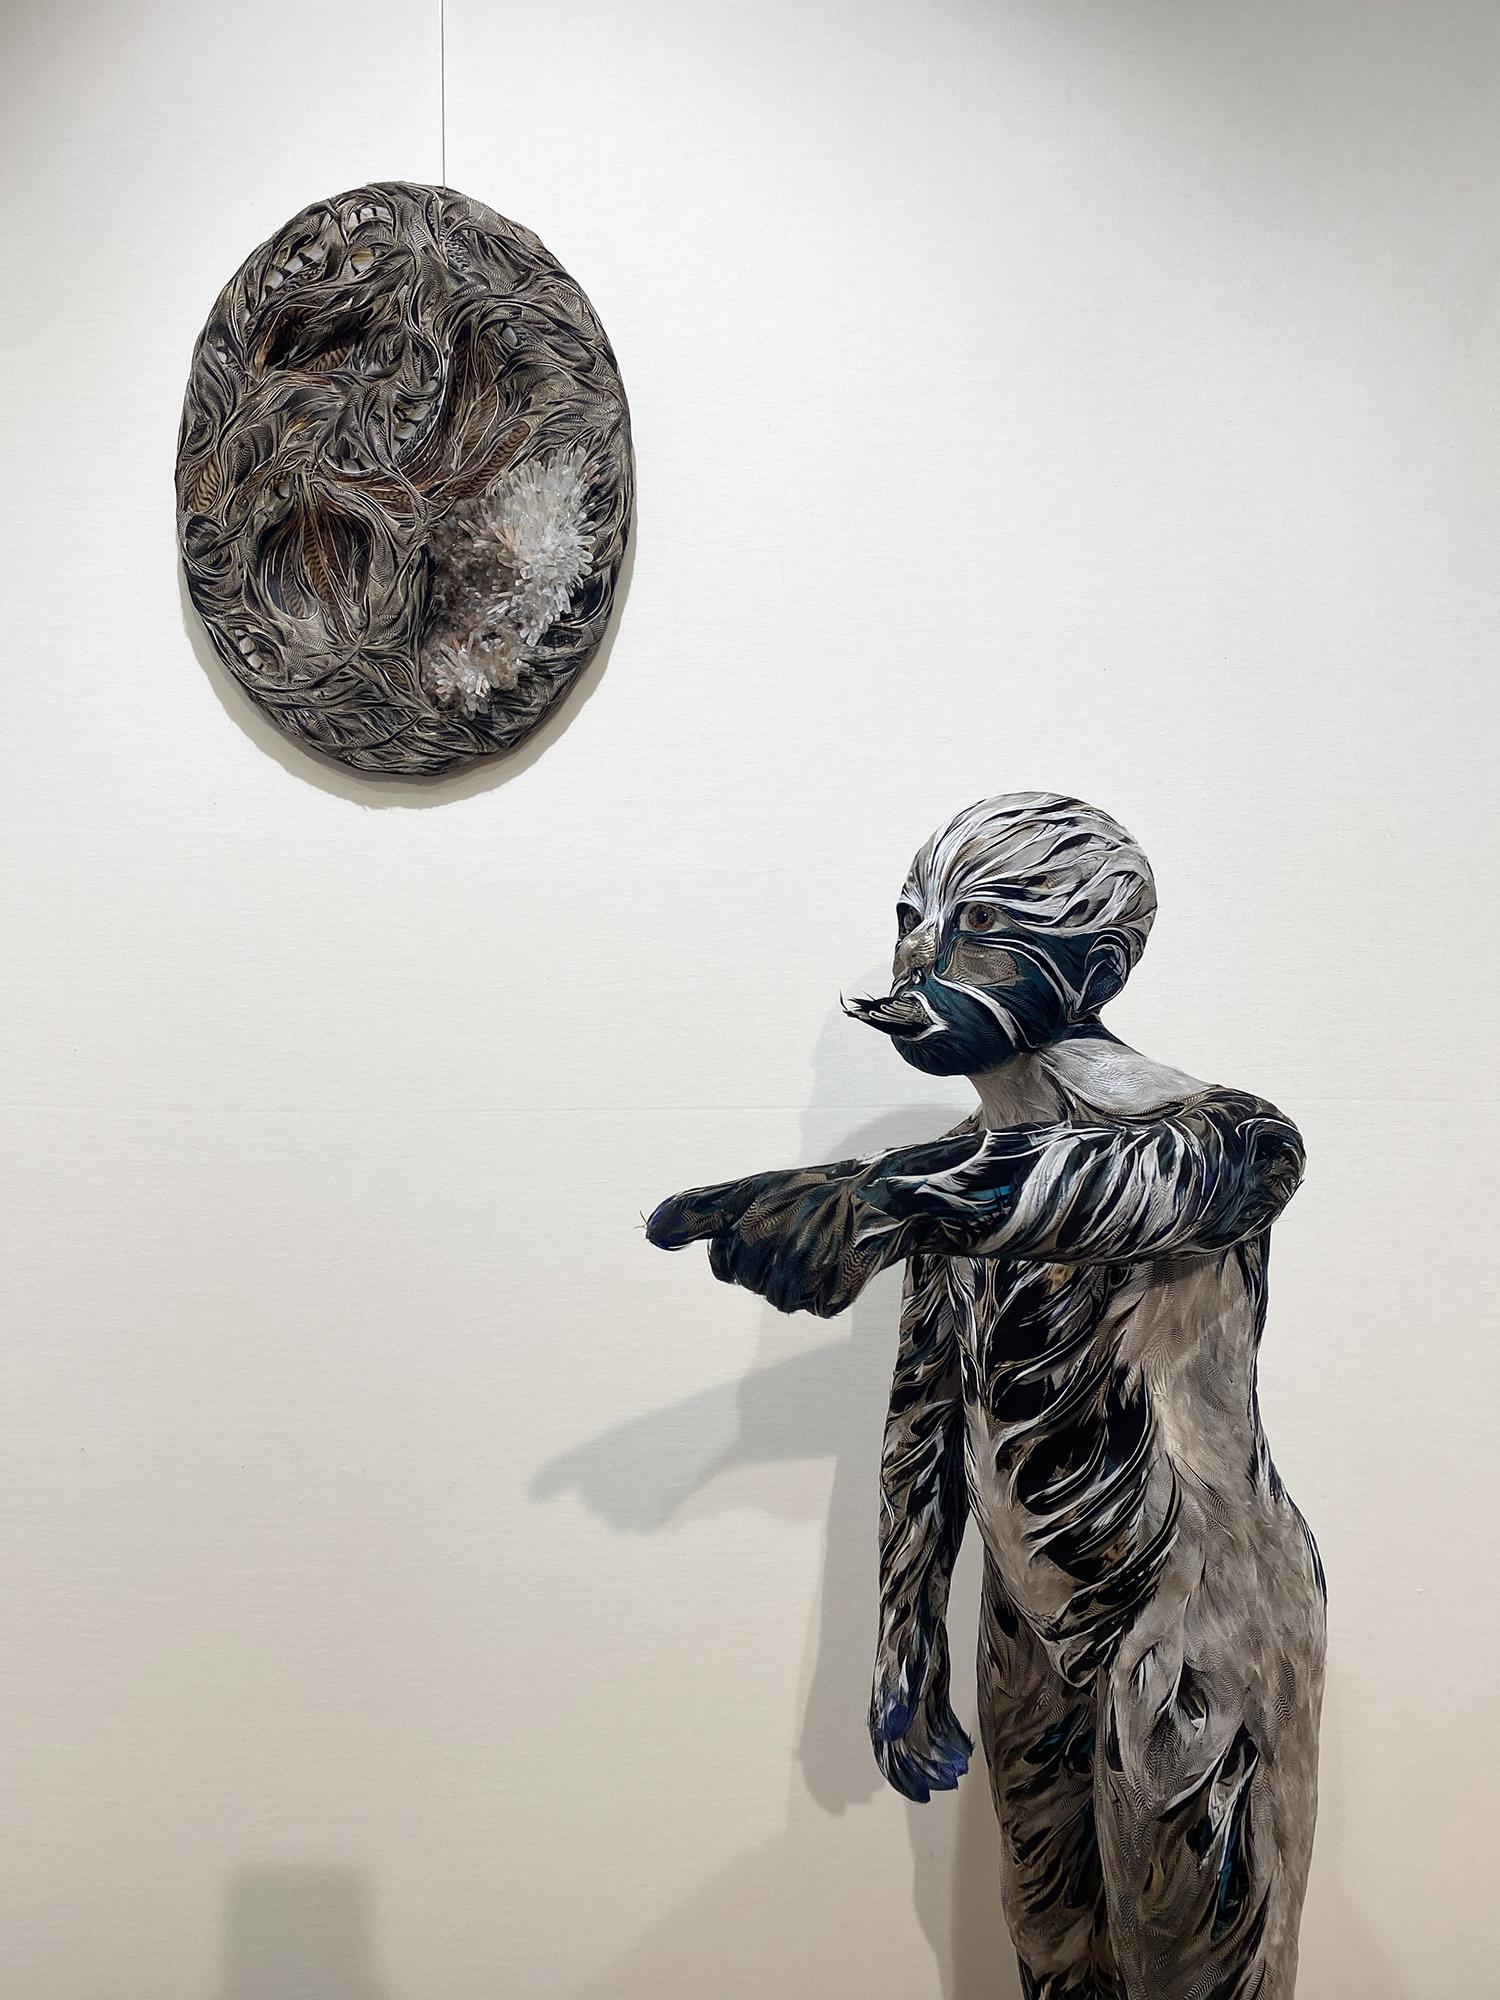 Thémis figurative sculpture, child, fairy tale, feathers by Laurence Le Constant For Sale 8